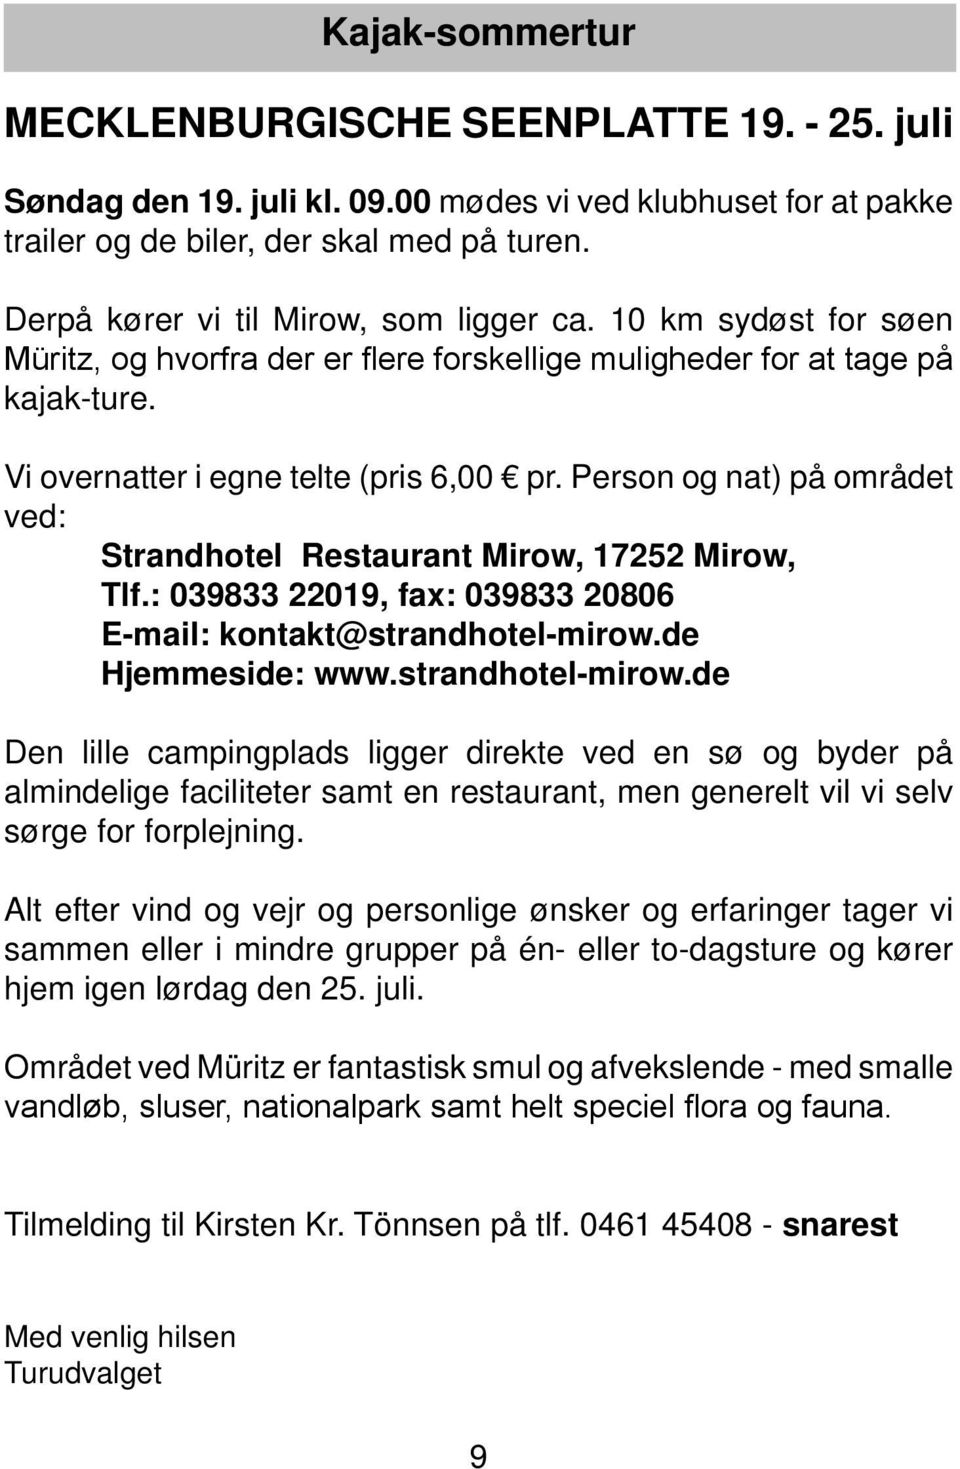 Person og nat) på området ved: Strandhotel Restaurant Mirow, 17252 Mirow, Tlf.: 039833 22019, fax: 039833 20806 E-mail: kontakt@strandhotel-mirow.